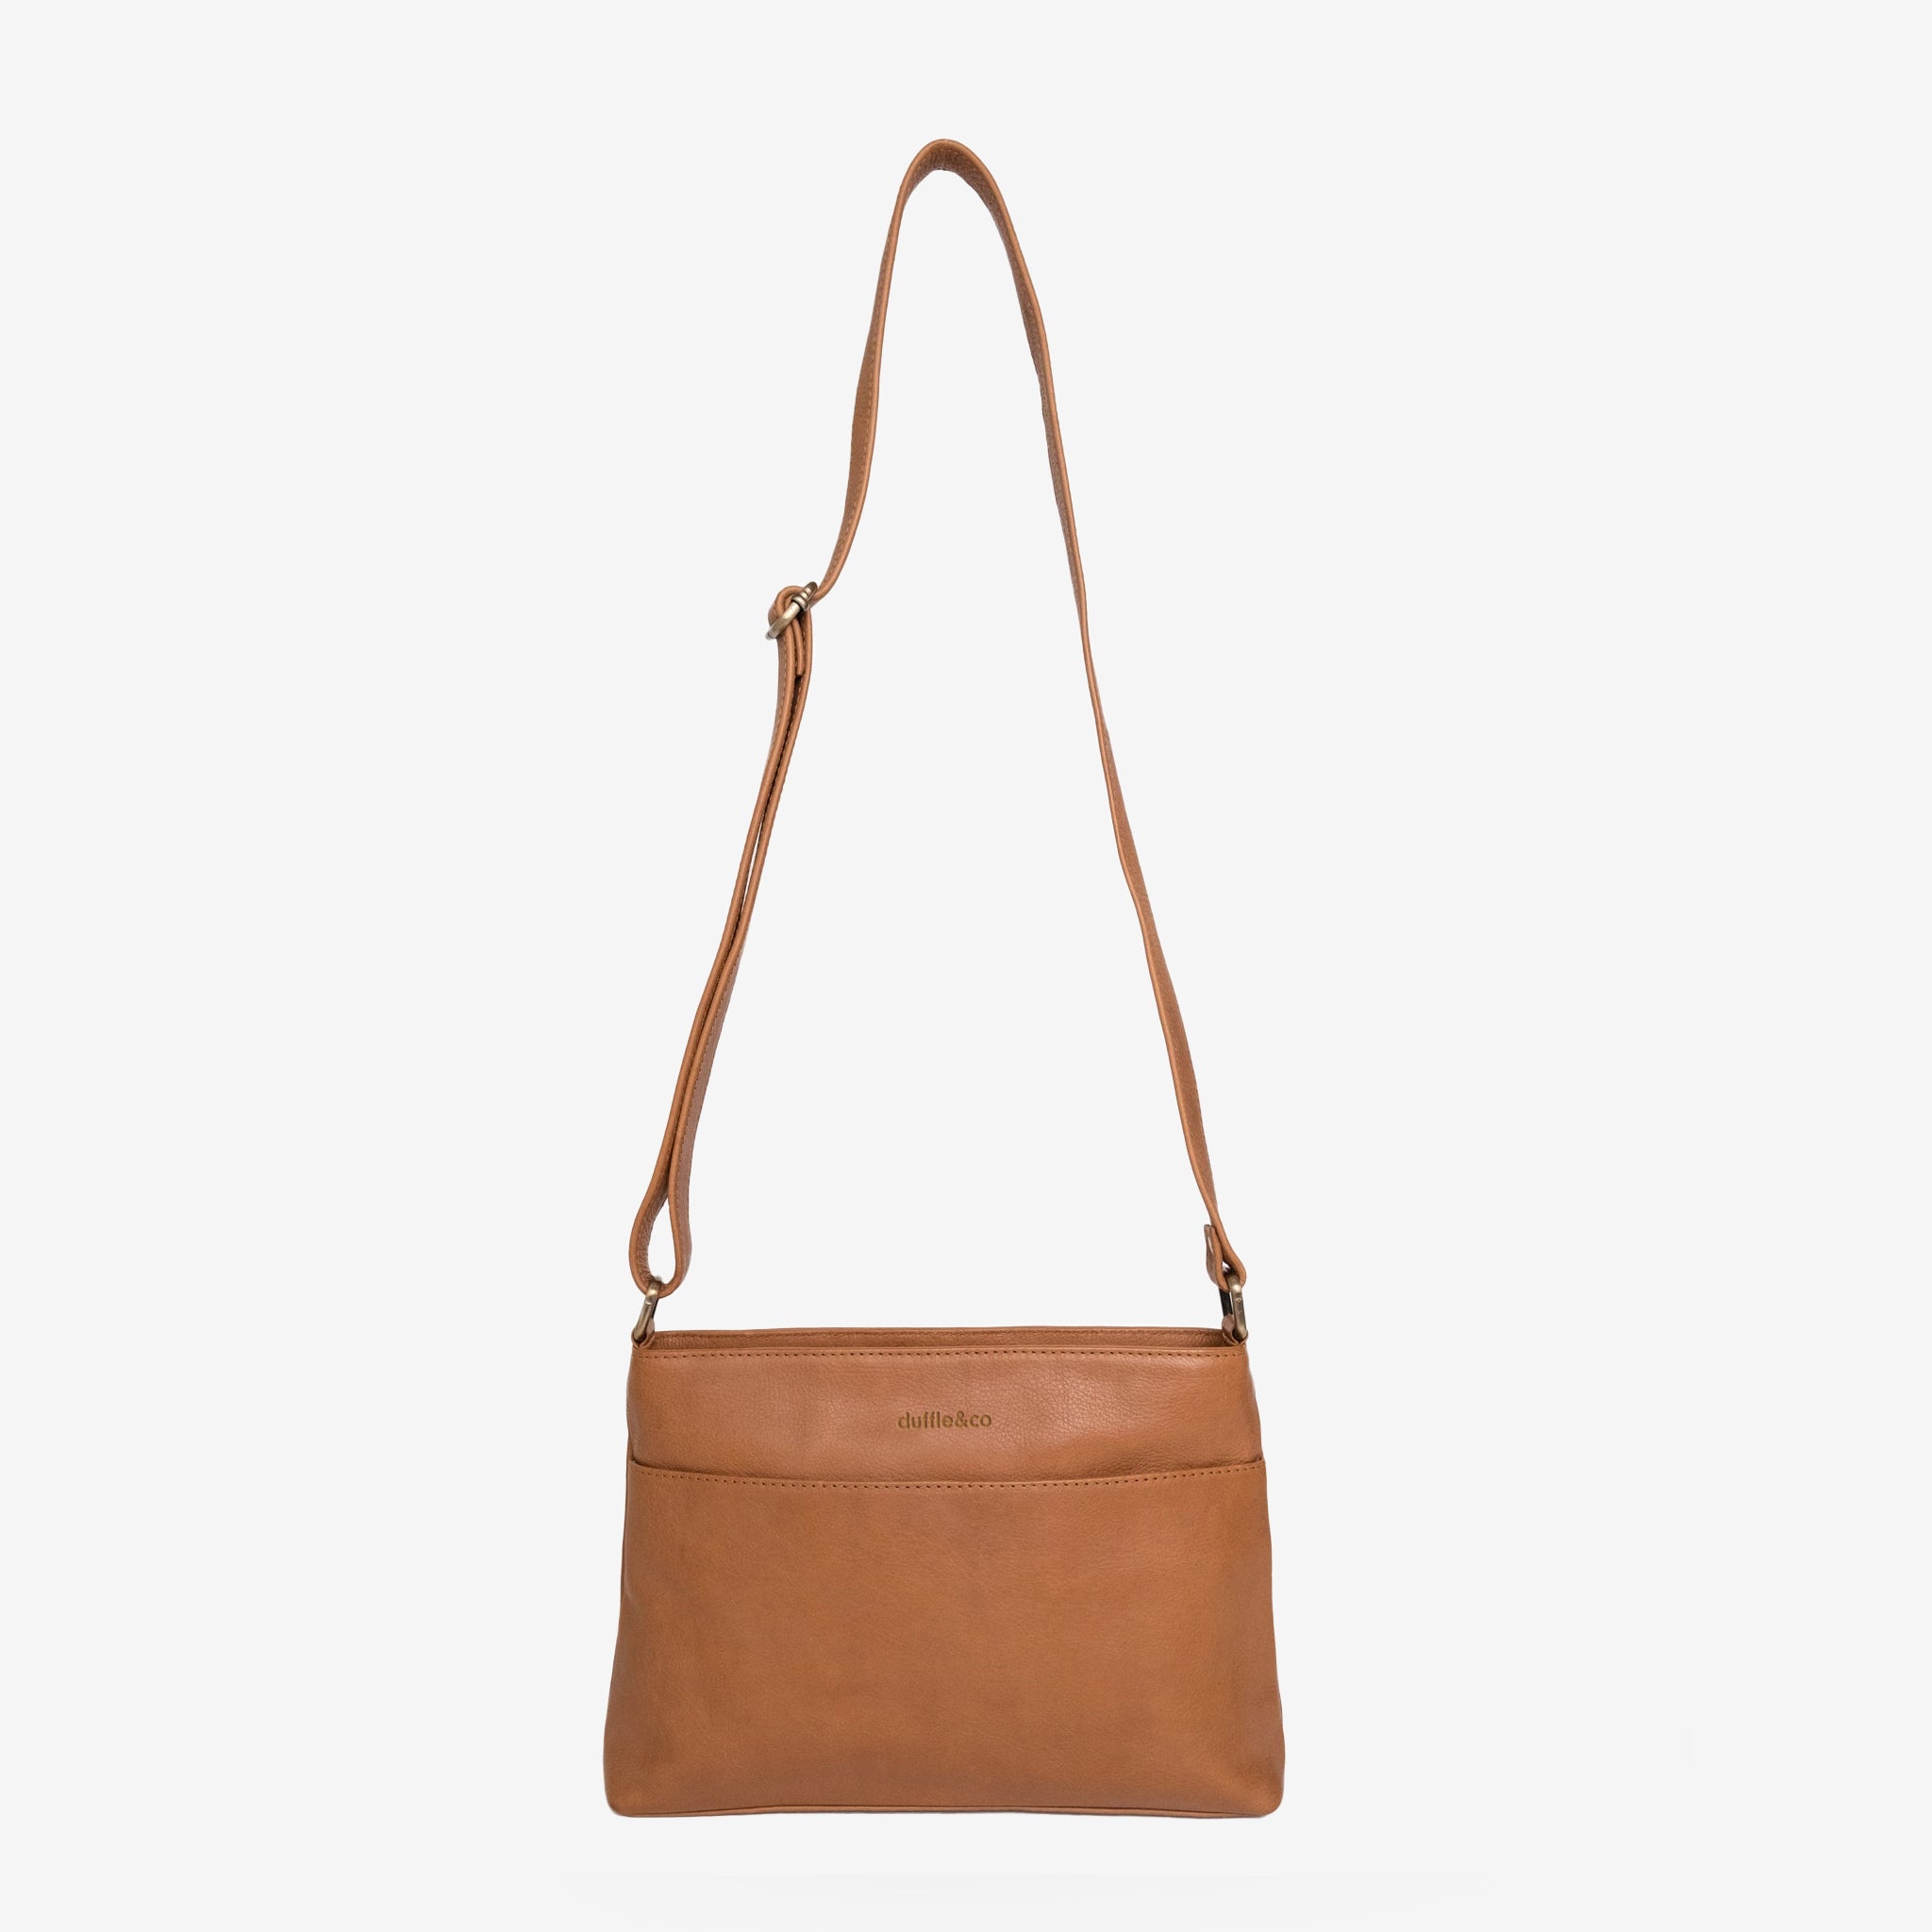 Rose Vintage Tan Leather Crossbody Handbag by Duffle&Co